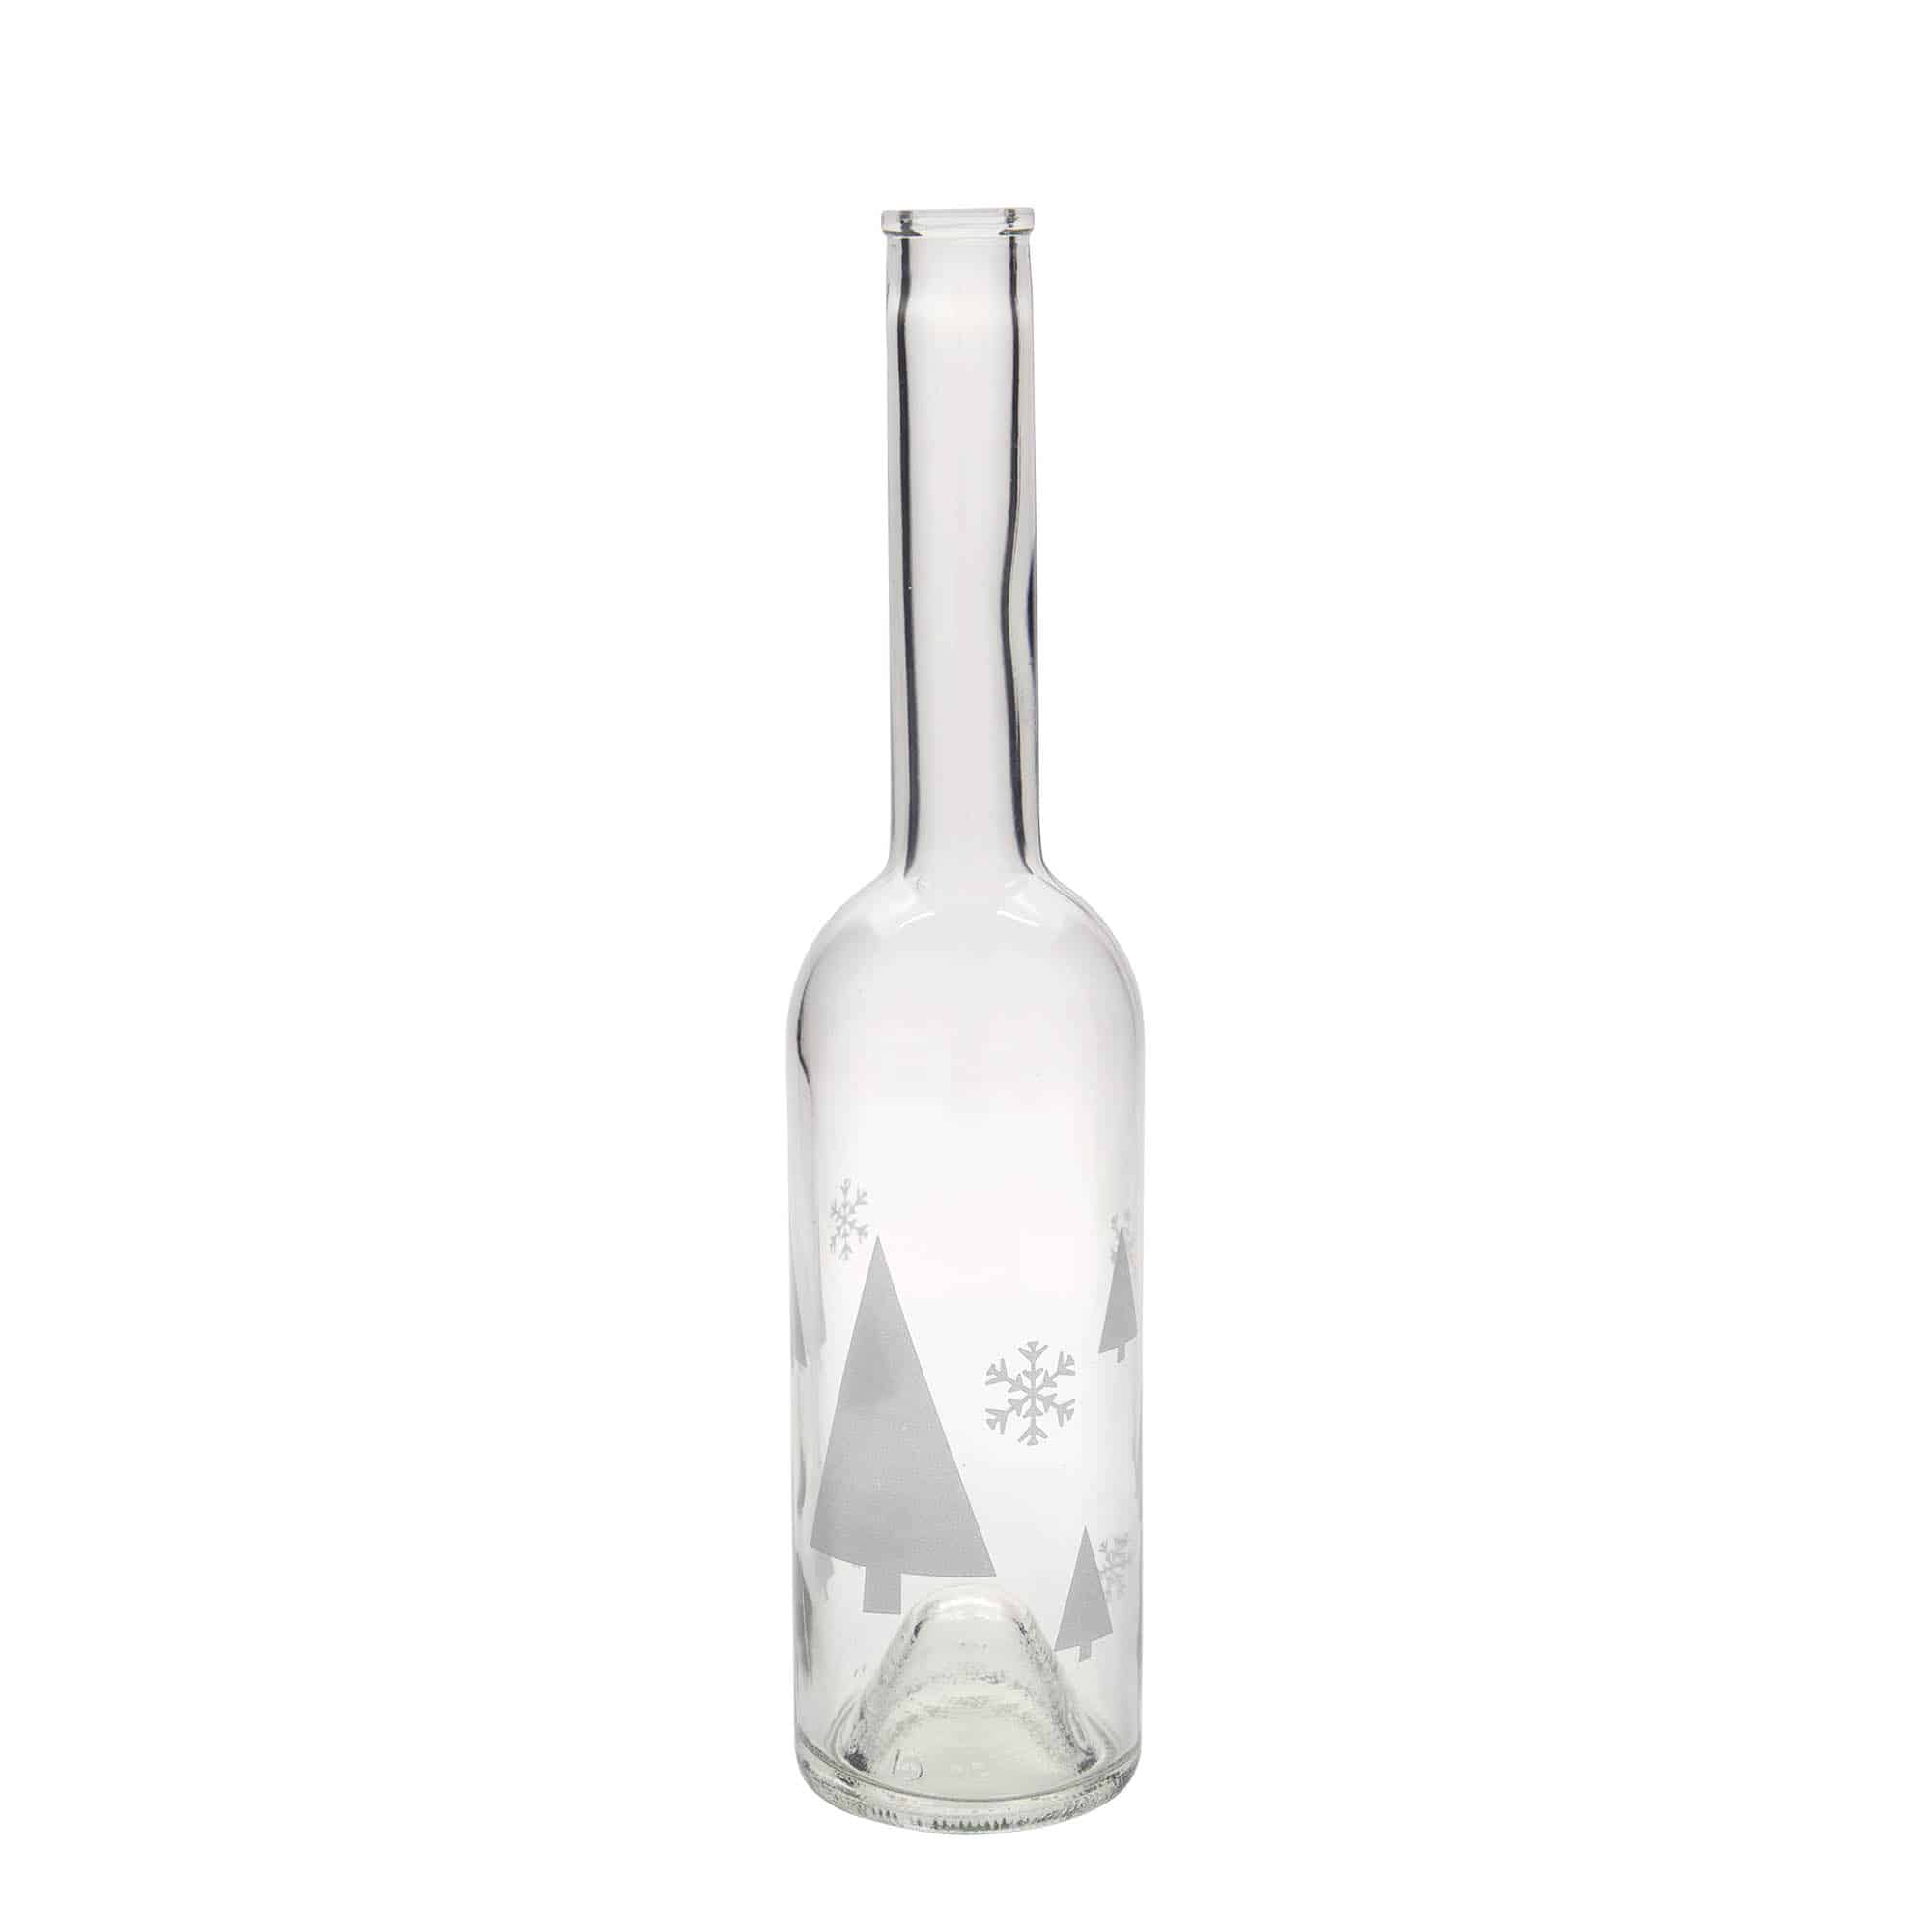 500 ml glass bottle 'Opera', print: snowflakes, closure: cork